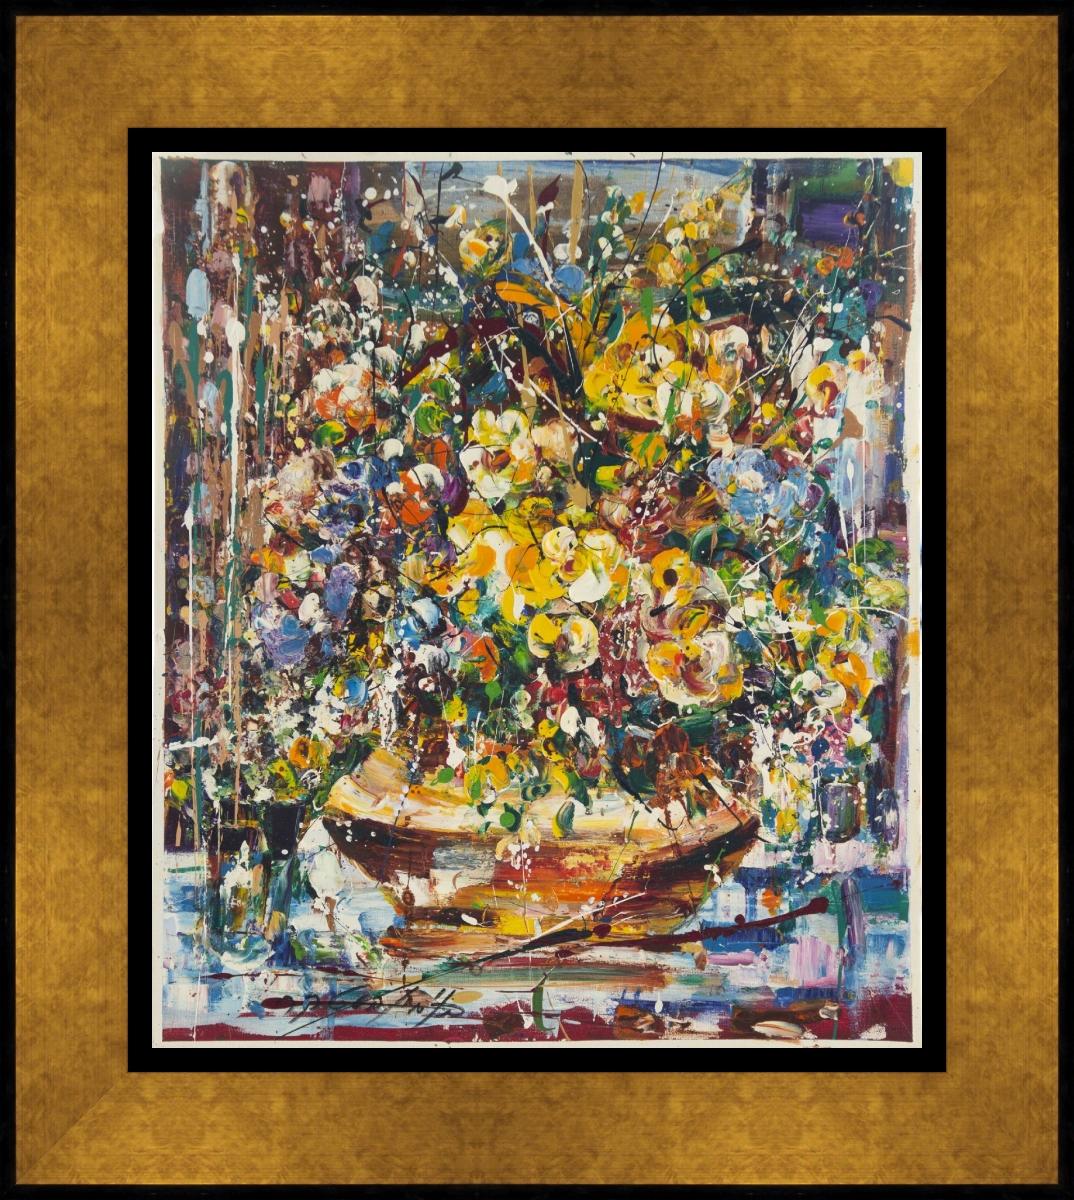 Binyamin Basteker
Sabbath flowers I, 2019
oil on canvas
70 x 60 cm
28 x 24 in

Exhibited: 